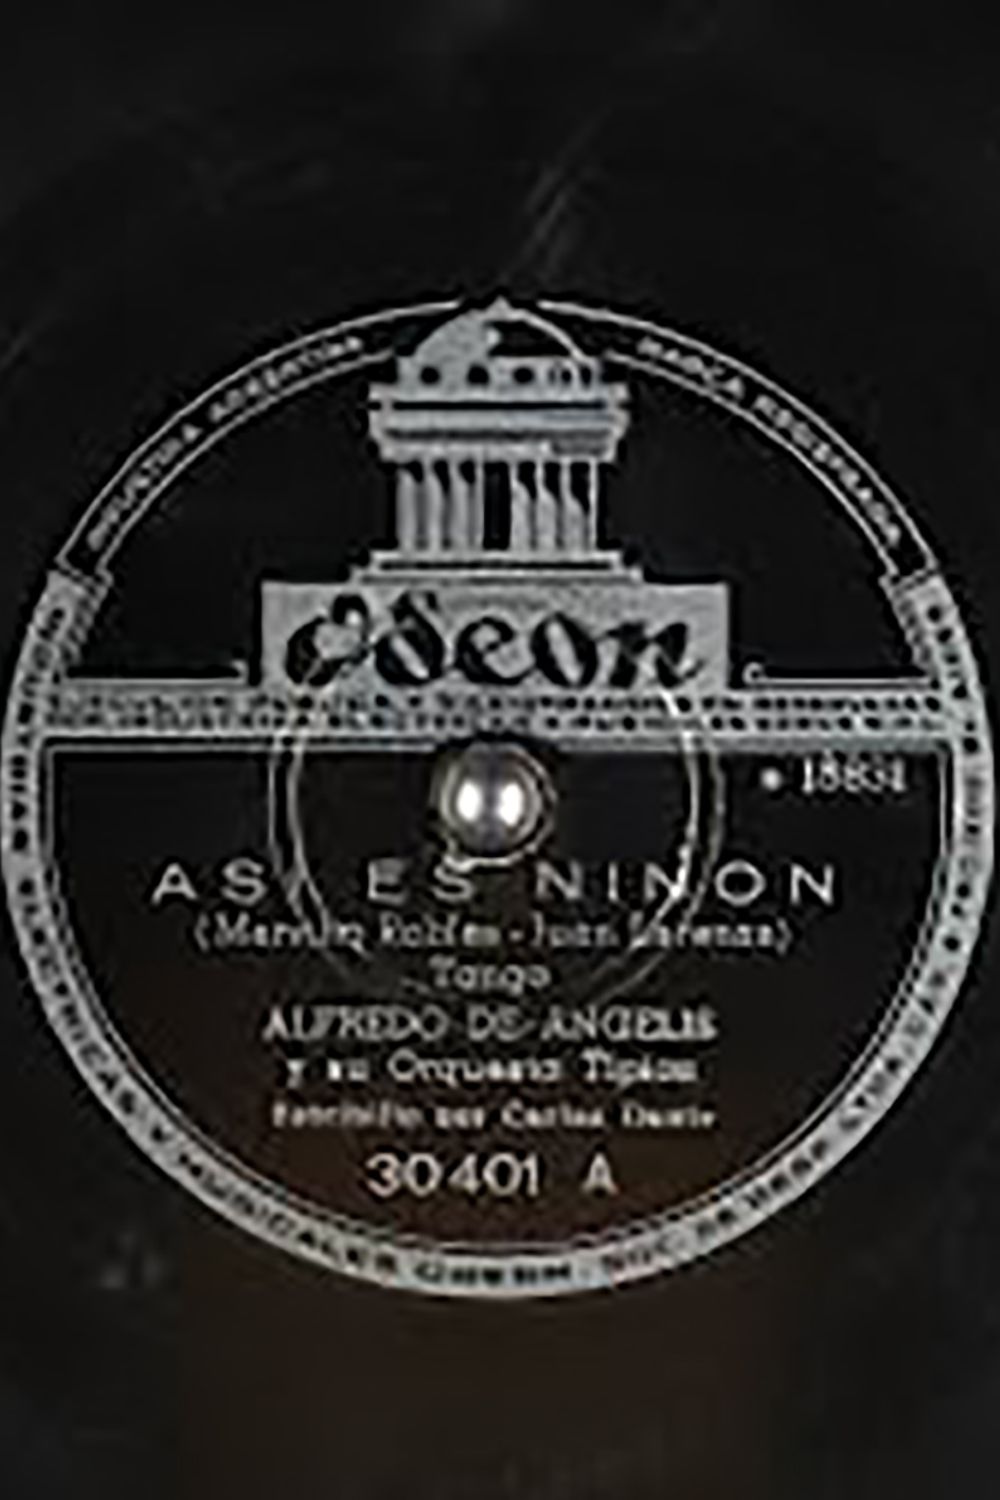 'Así es Ninón' vynil disc. Argentine Tango music.